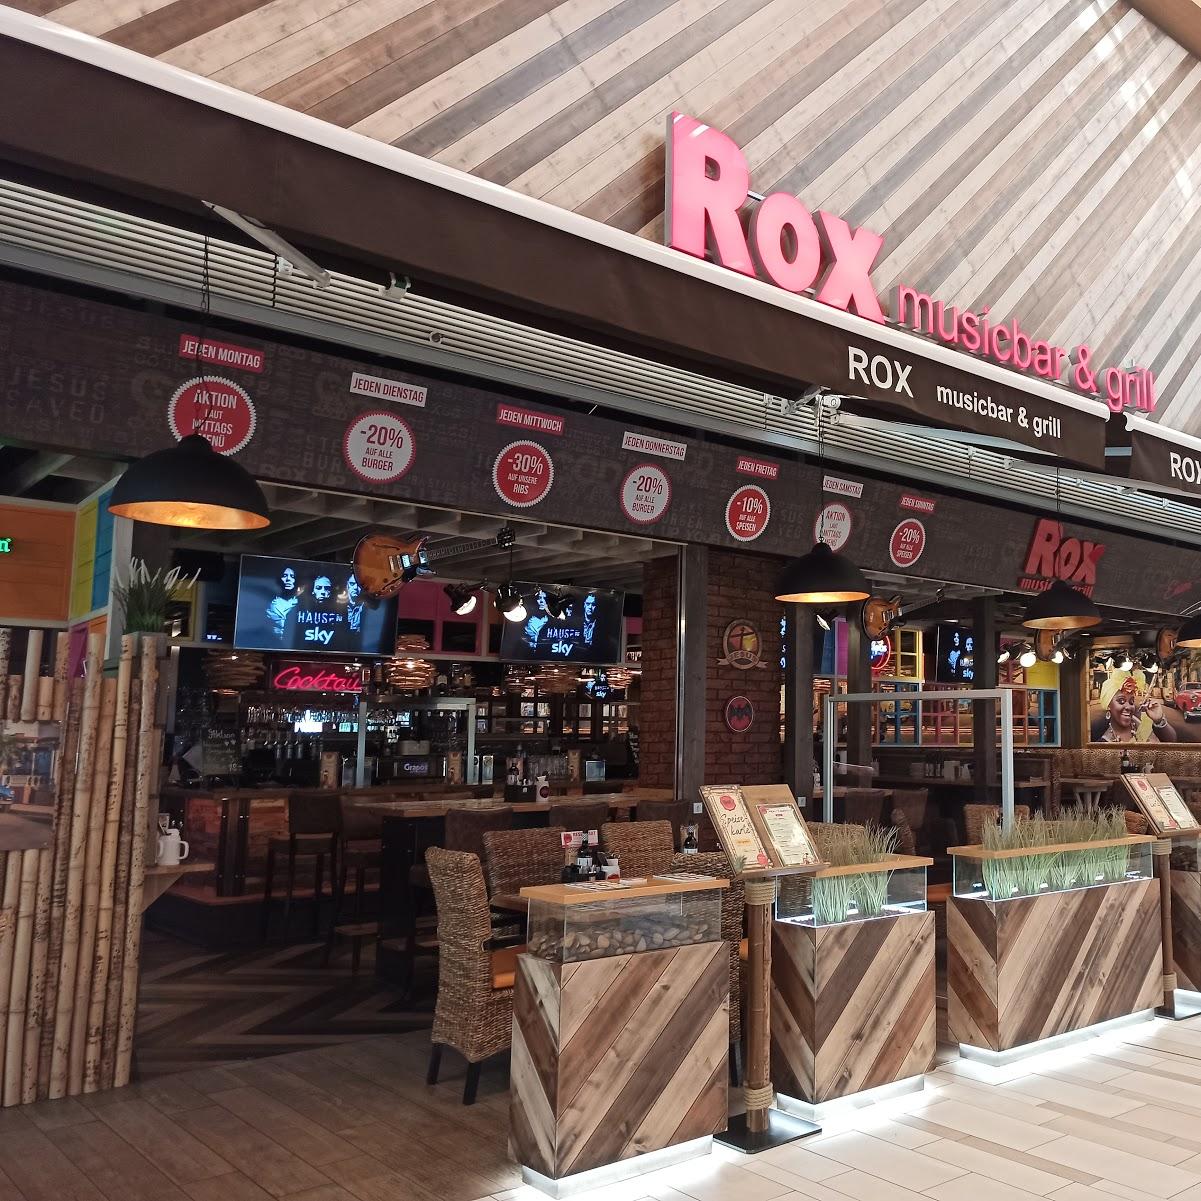 Restaurant "ROX Musicbar" in Wiener Neudorf